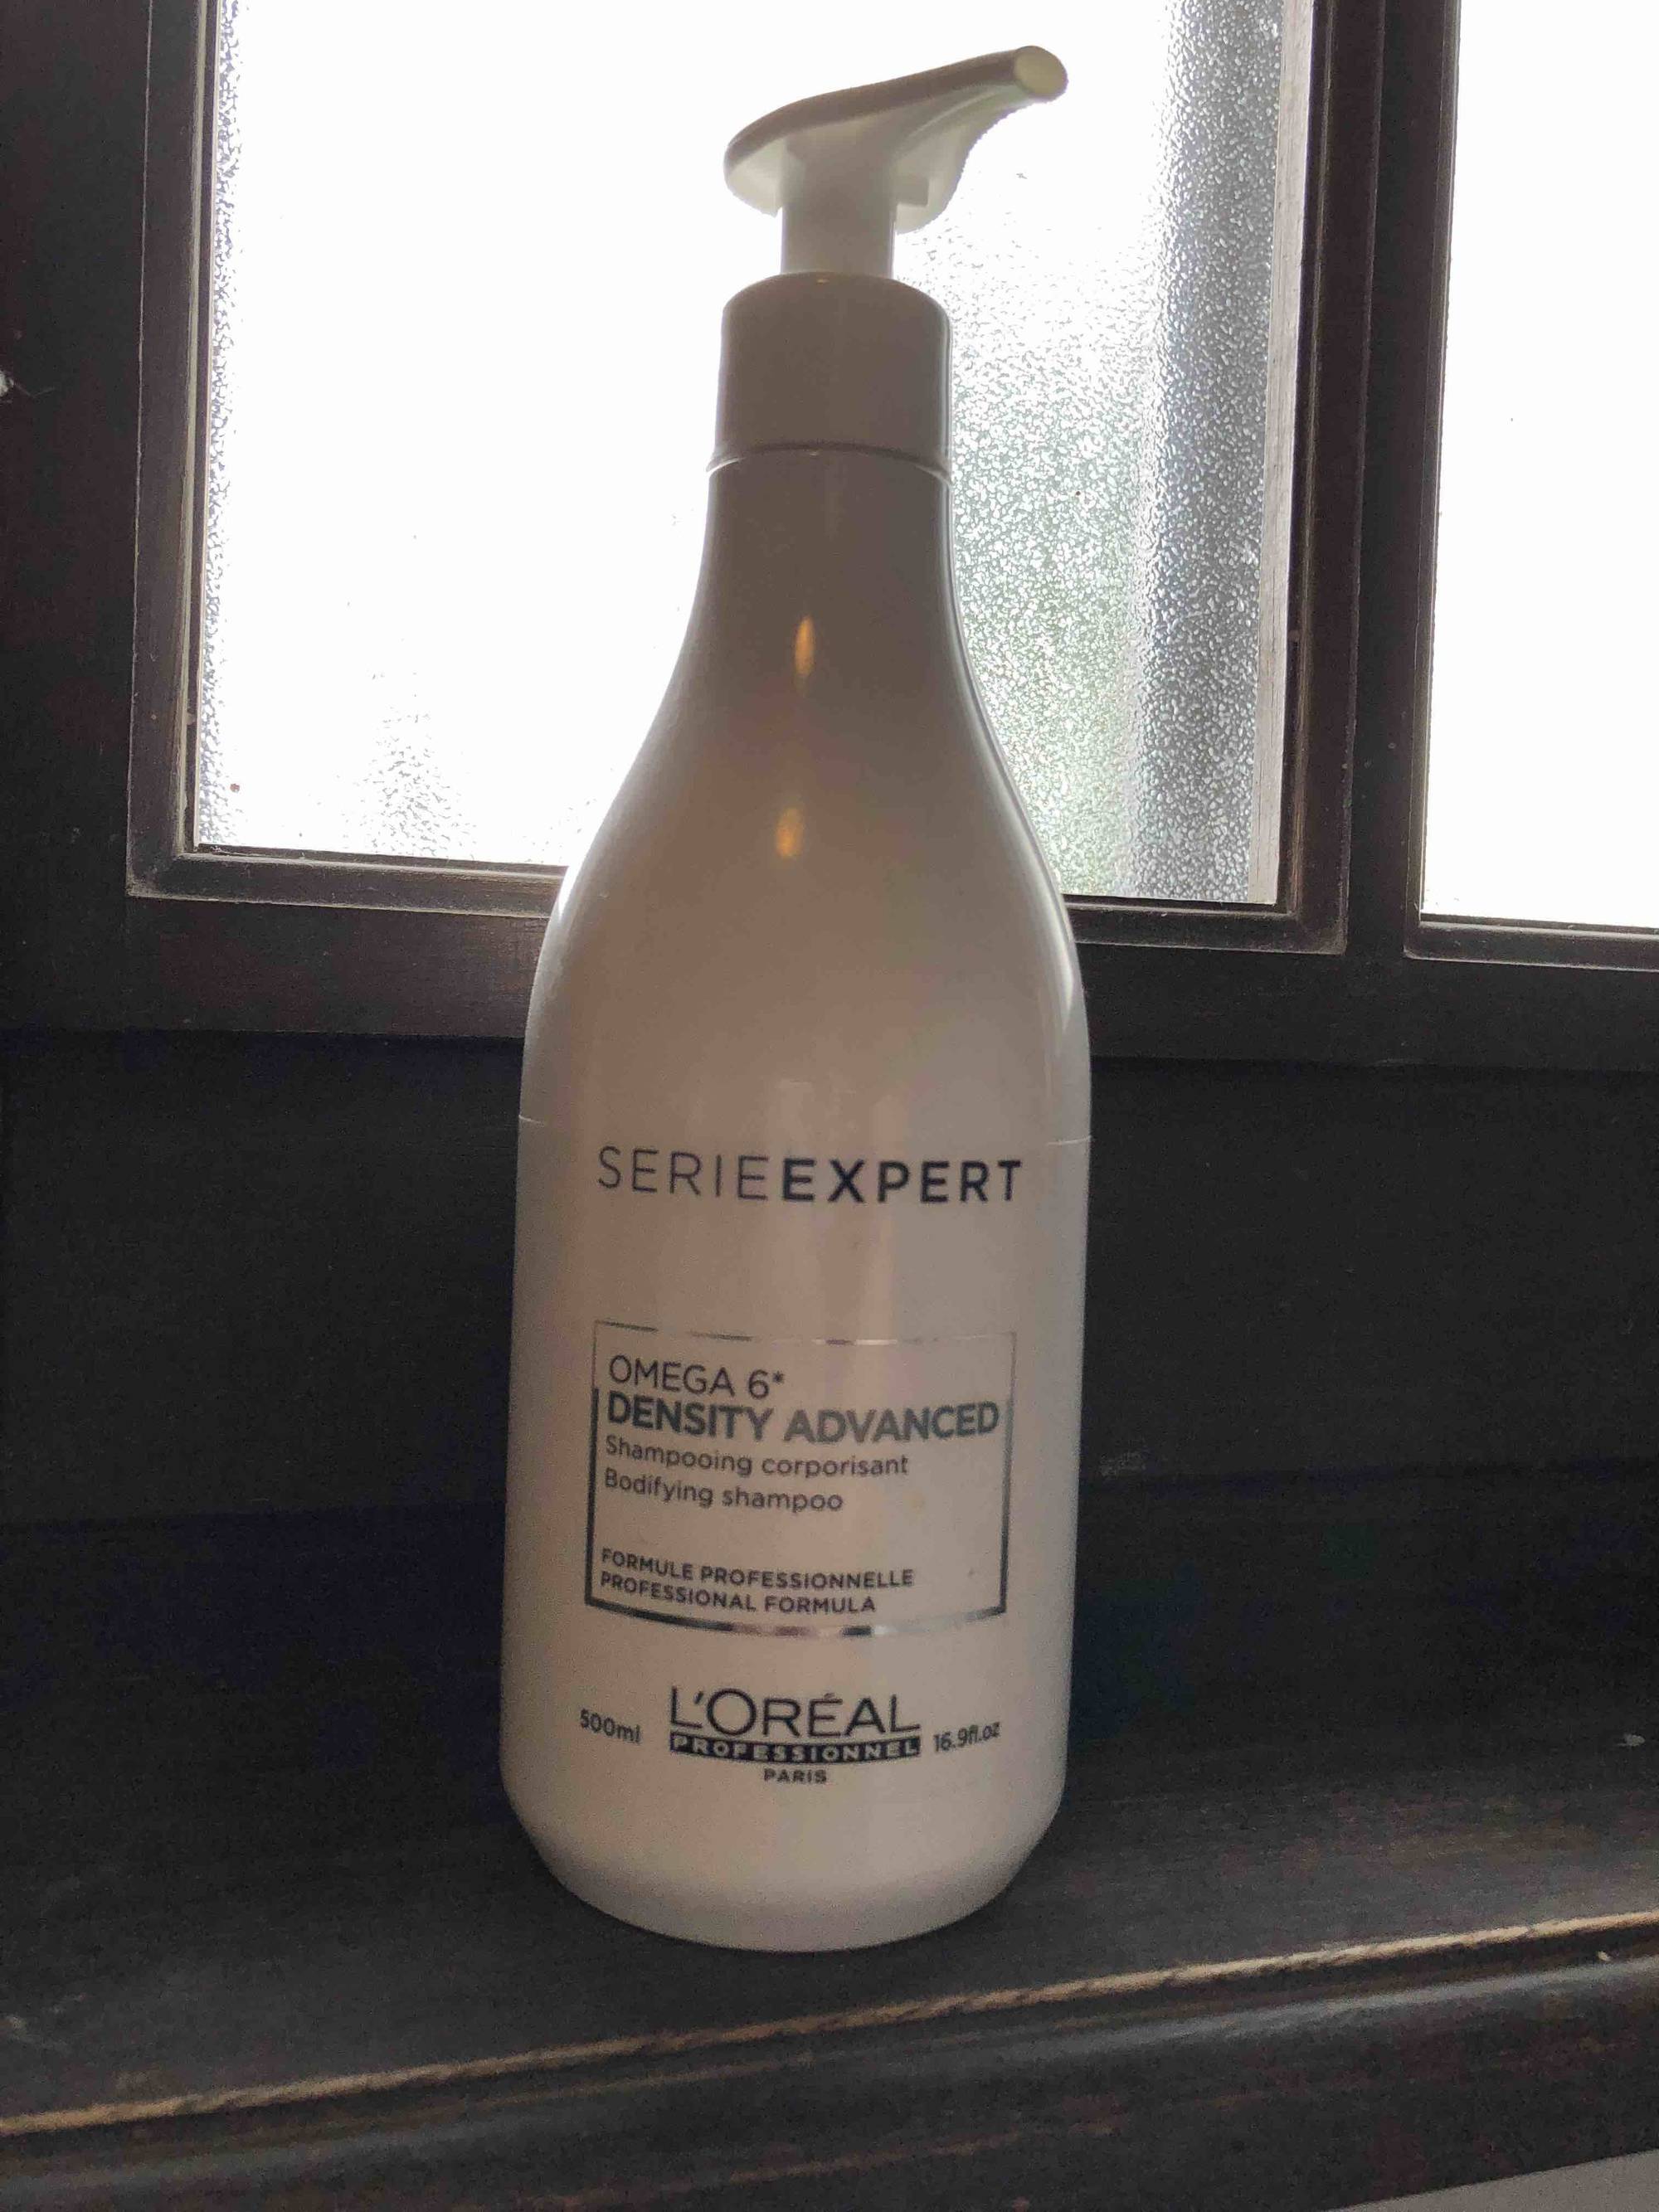 L'ORÉAL - Serie expert - Density advanced shampooing corporisant